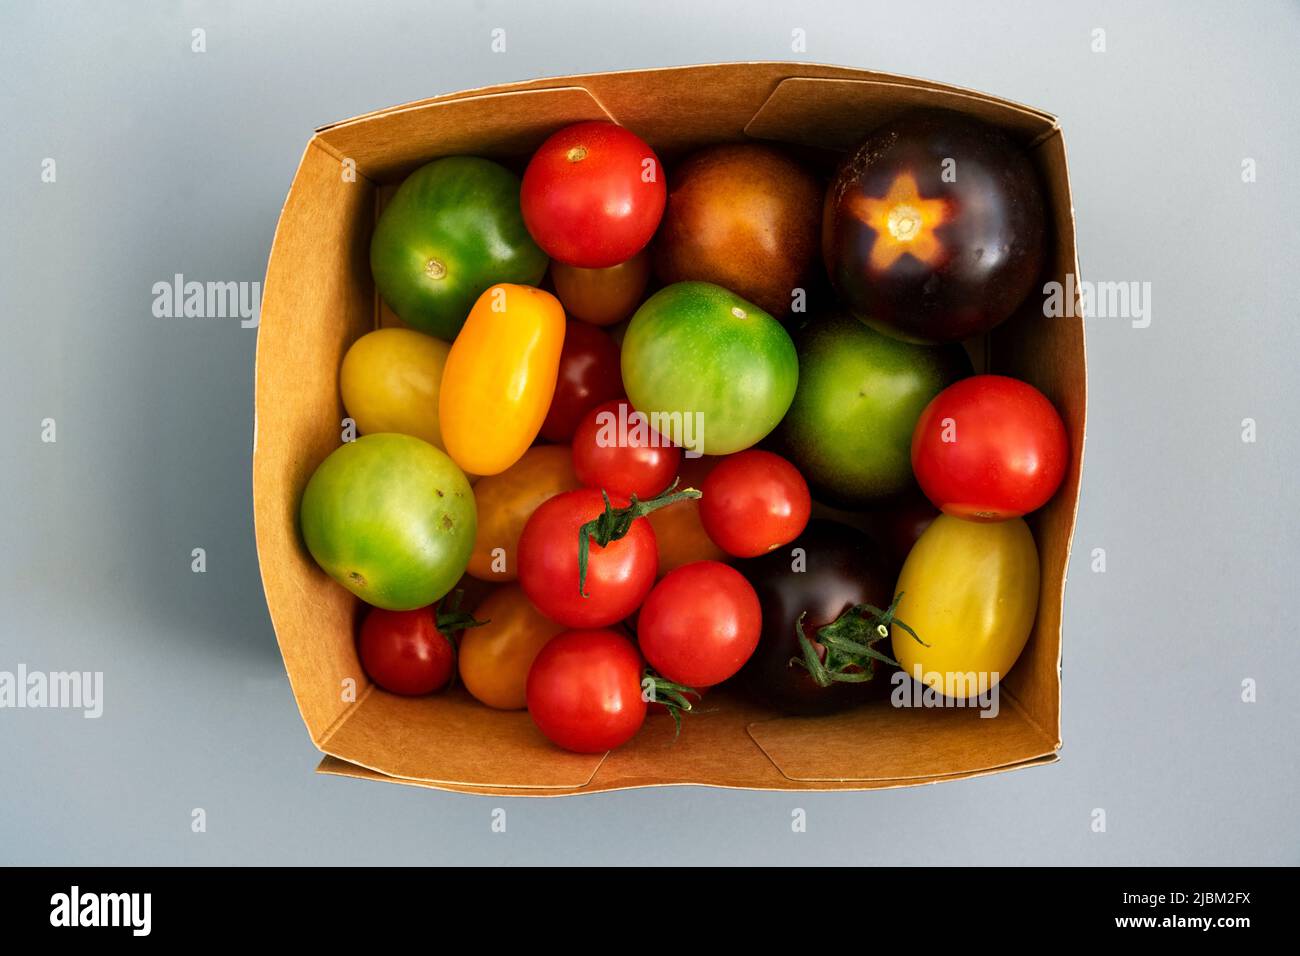 Coloured tomatoes Stock Photo